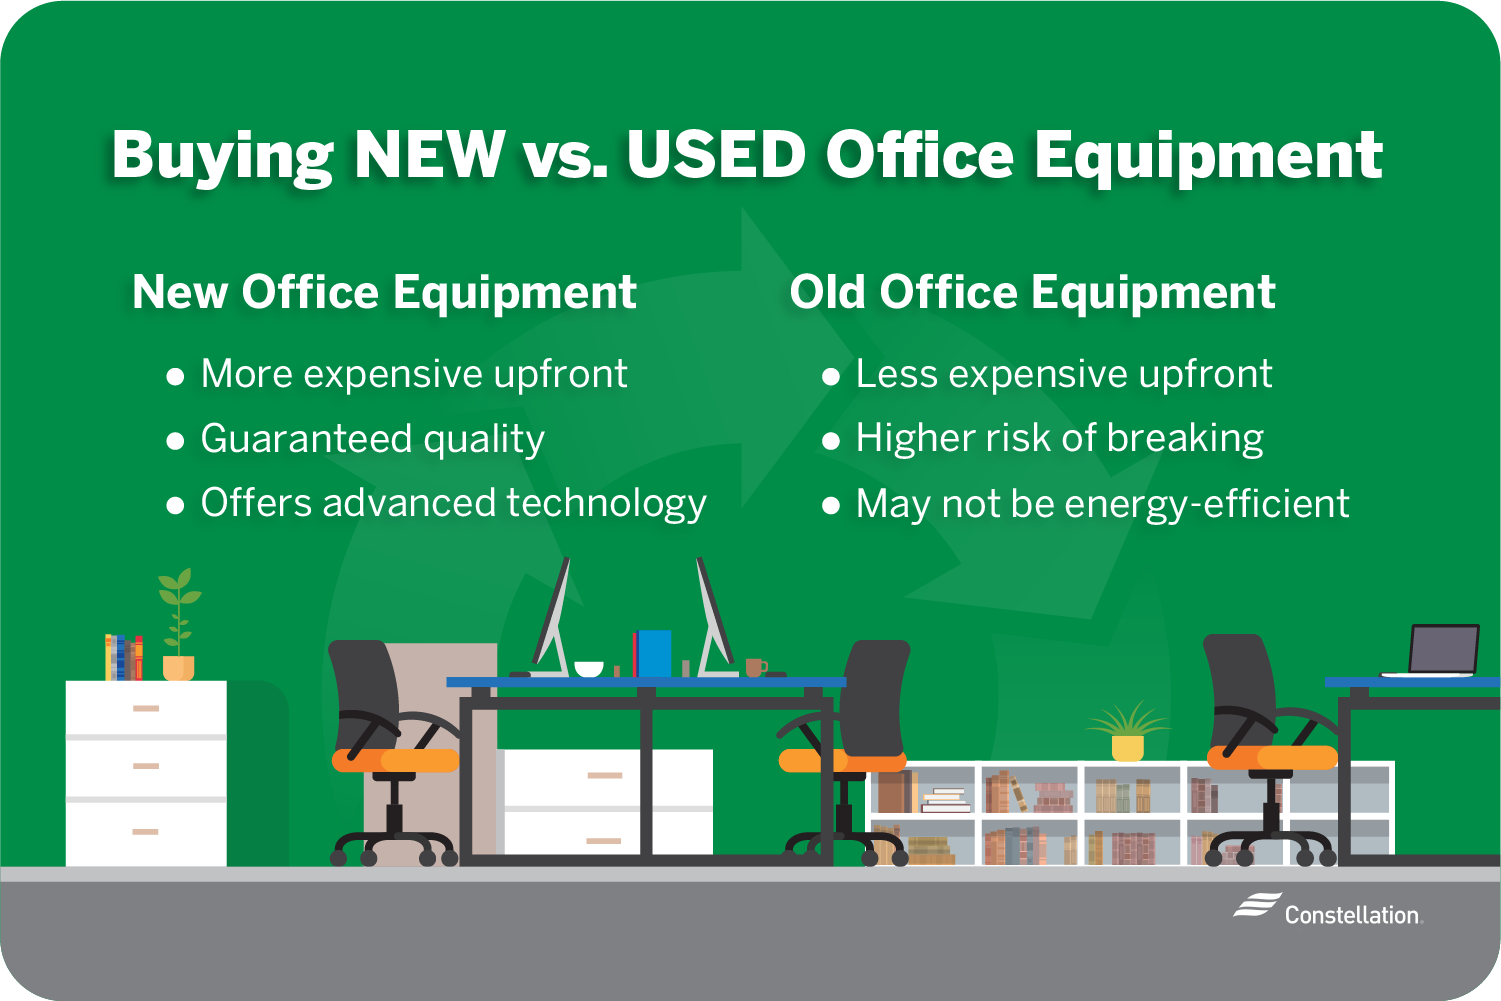 New vs used office equipment